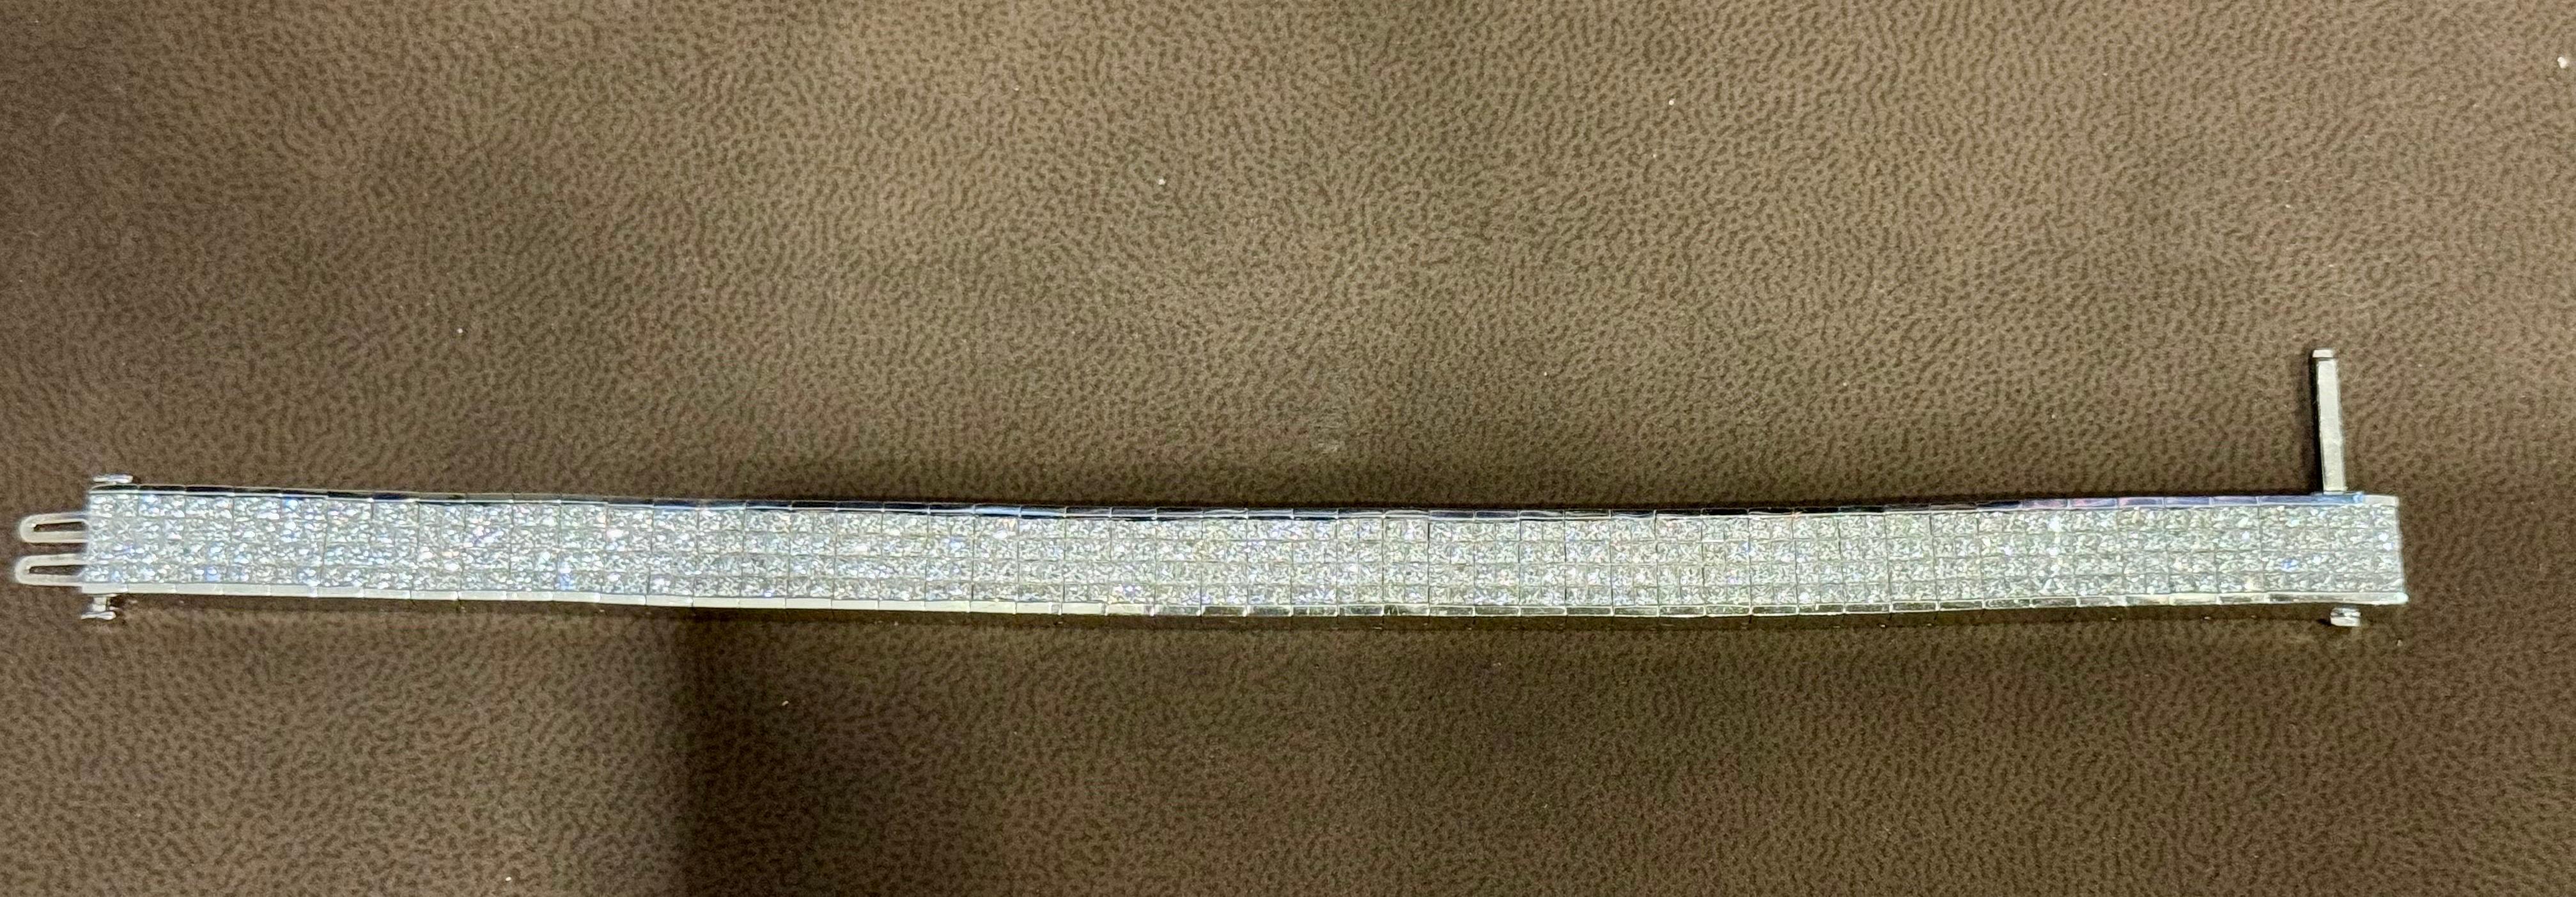 24 Carats Four Row Princess Cut Diamond Tennis Bracelet 18kt White Gold 7.3